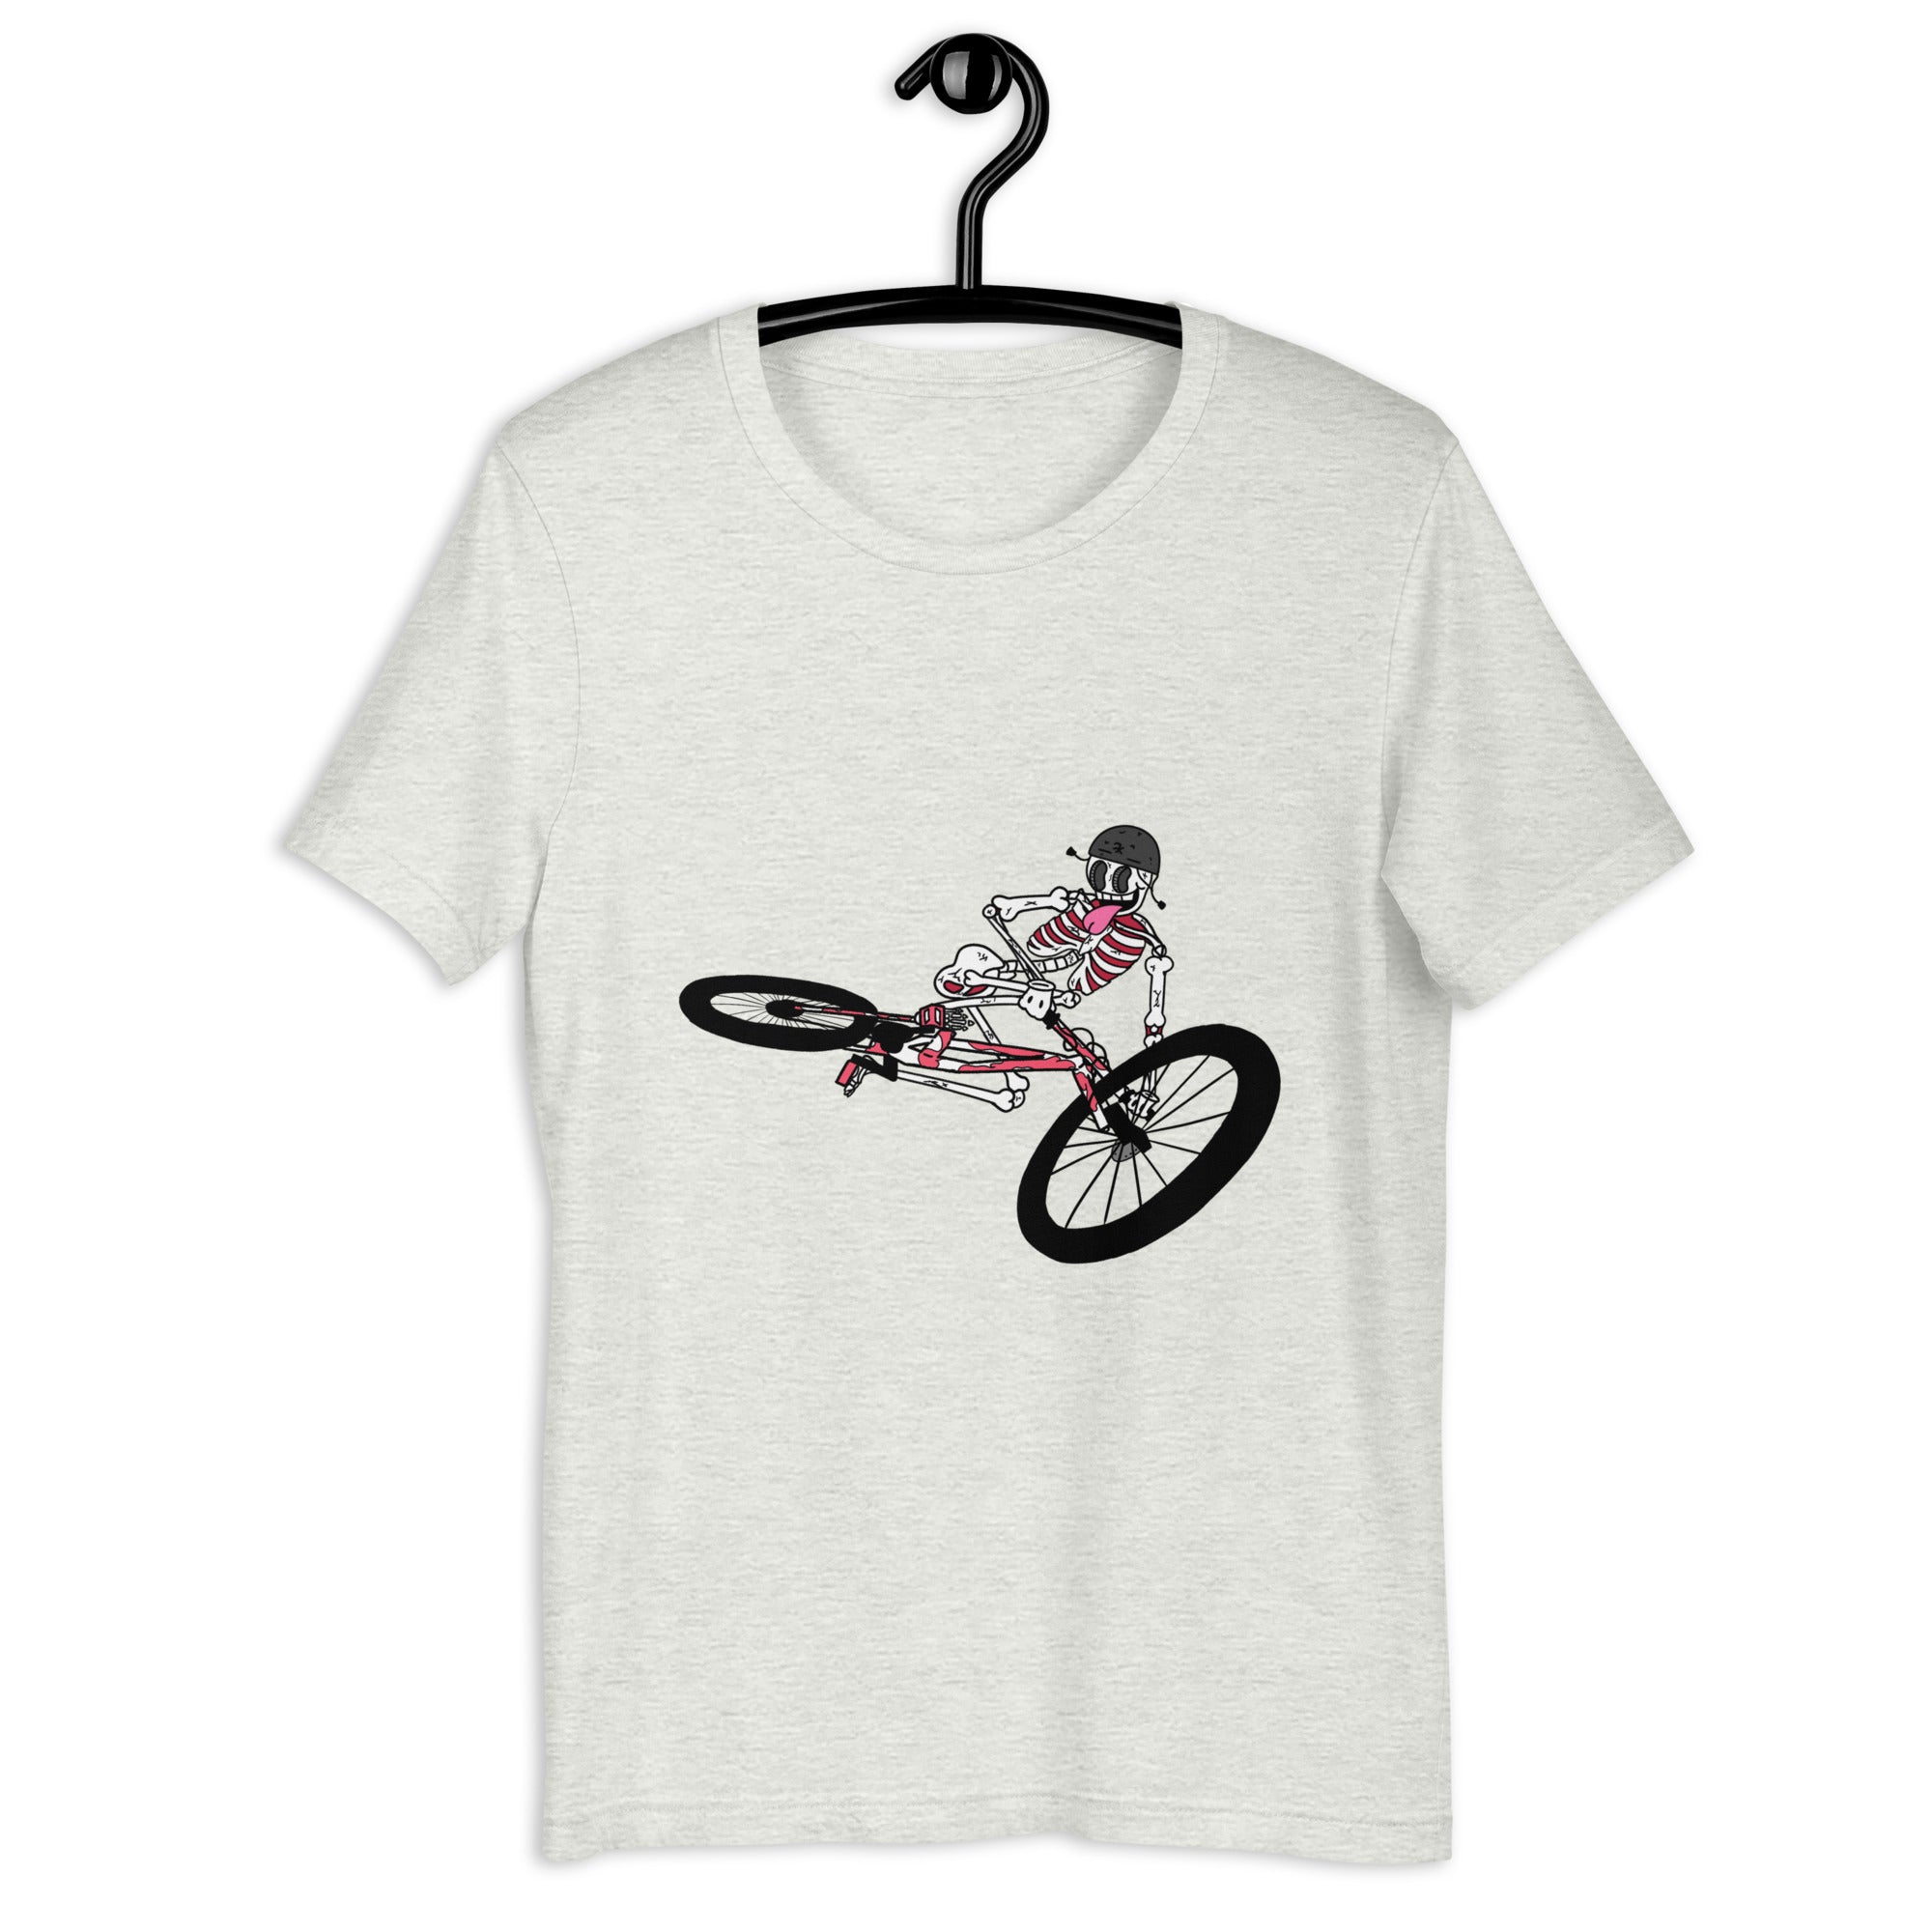 Skelton Rider - Unisex t-shirt